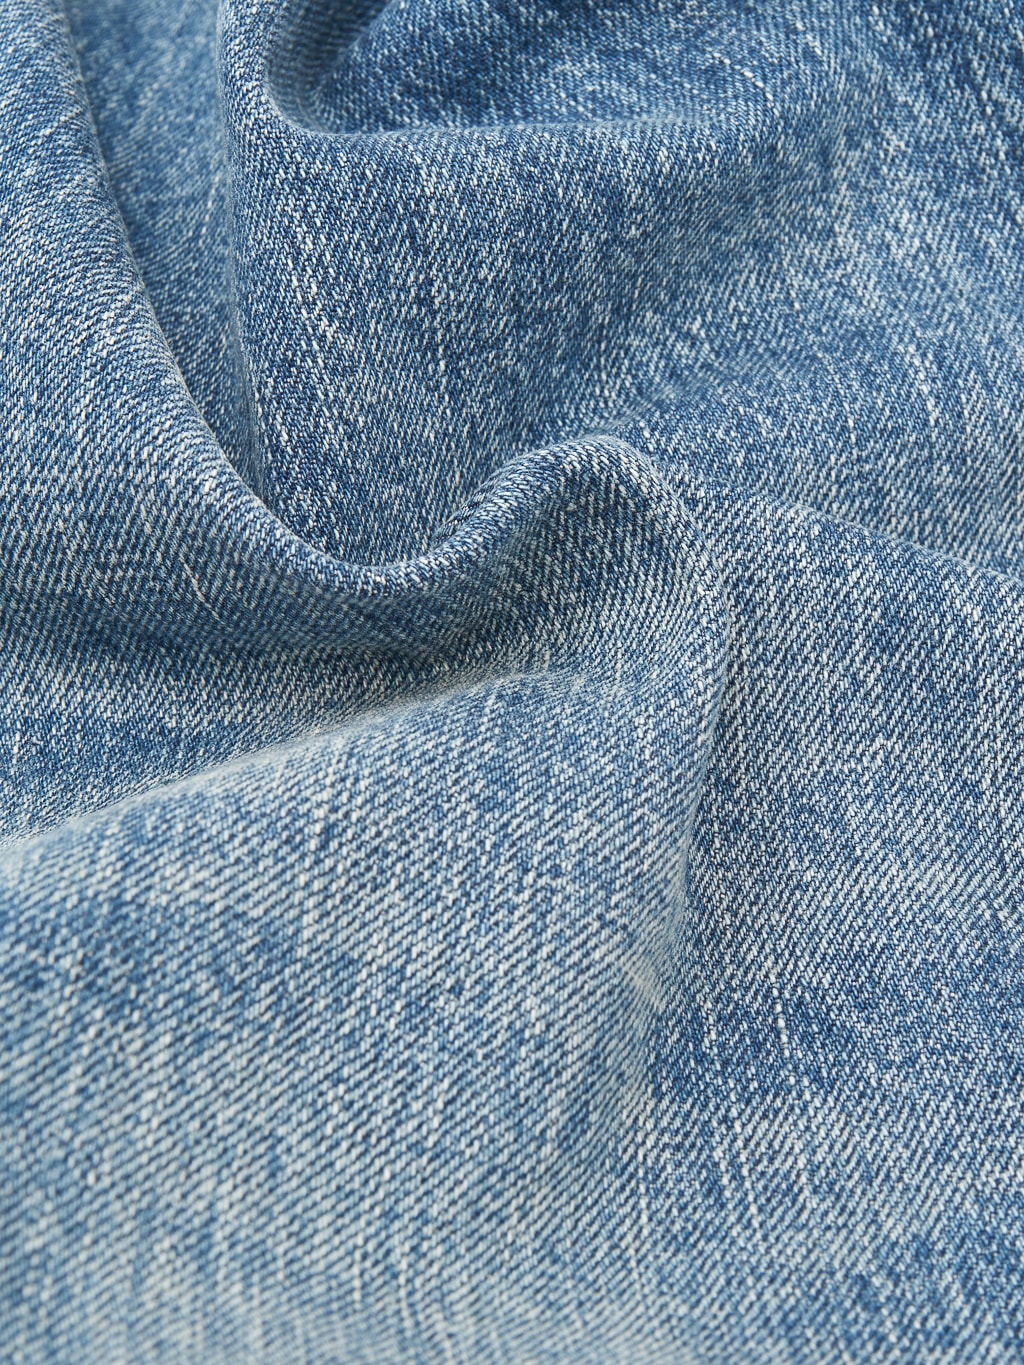 Fullcount 1108 Dartford Slim Straight Jeans fabric denim texture